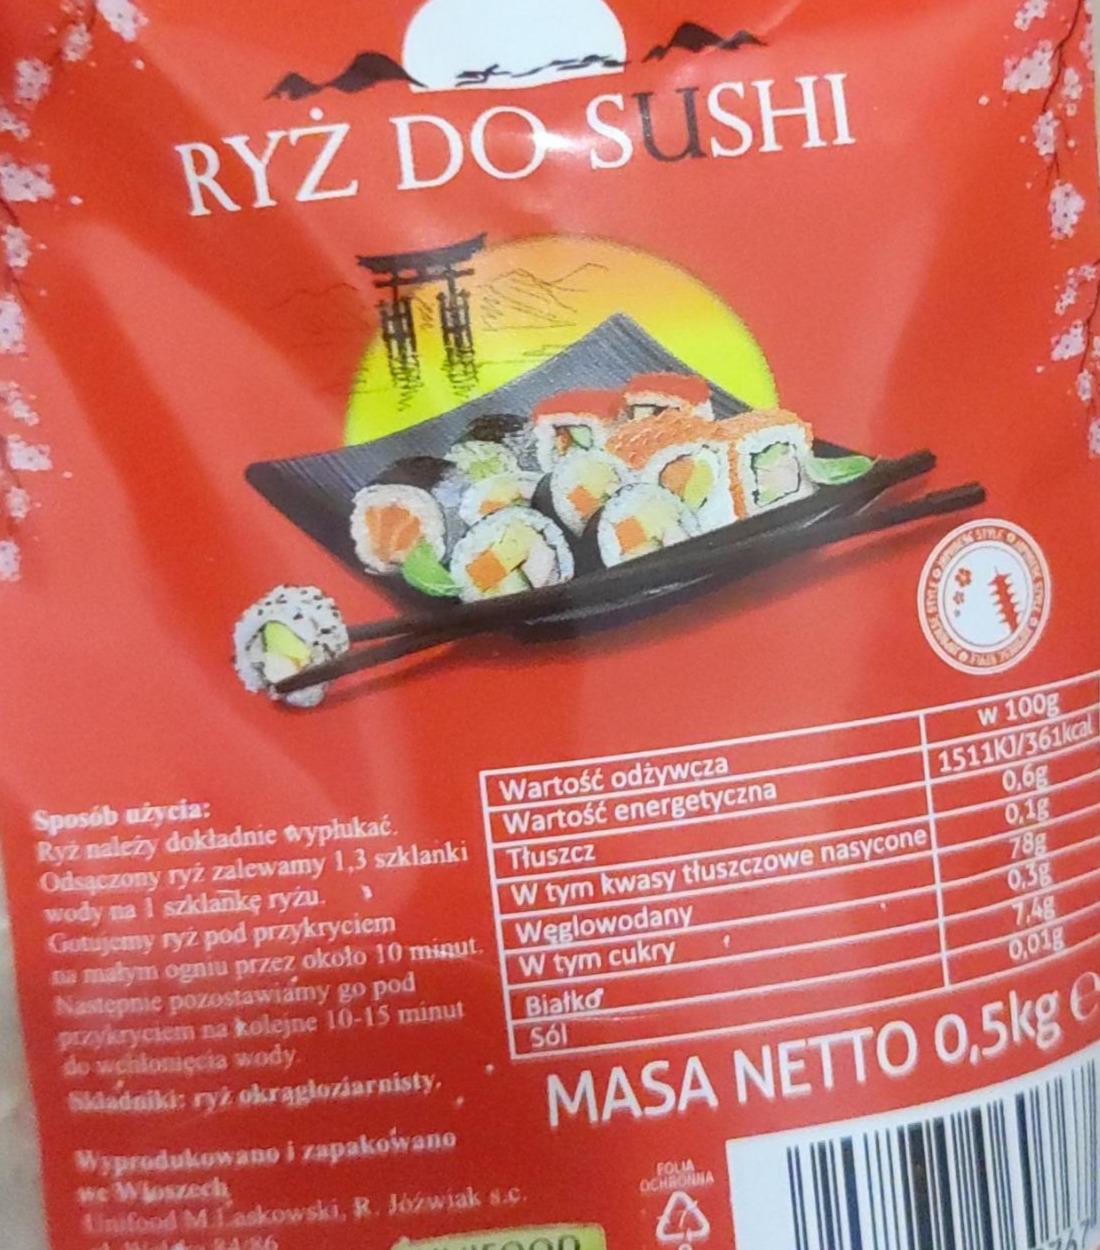 Zdjęcia - Ryż do sushi Sakura